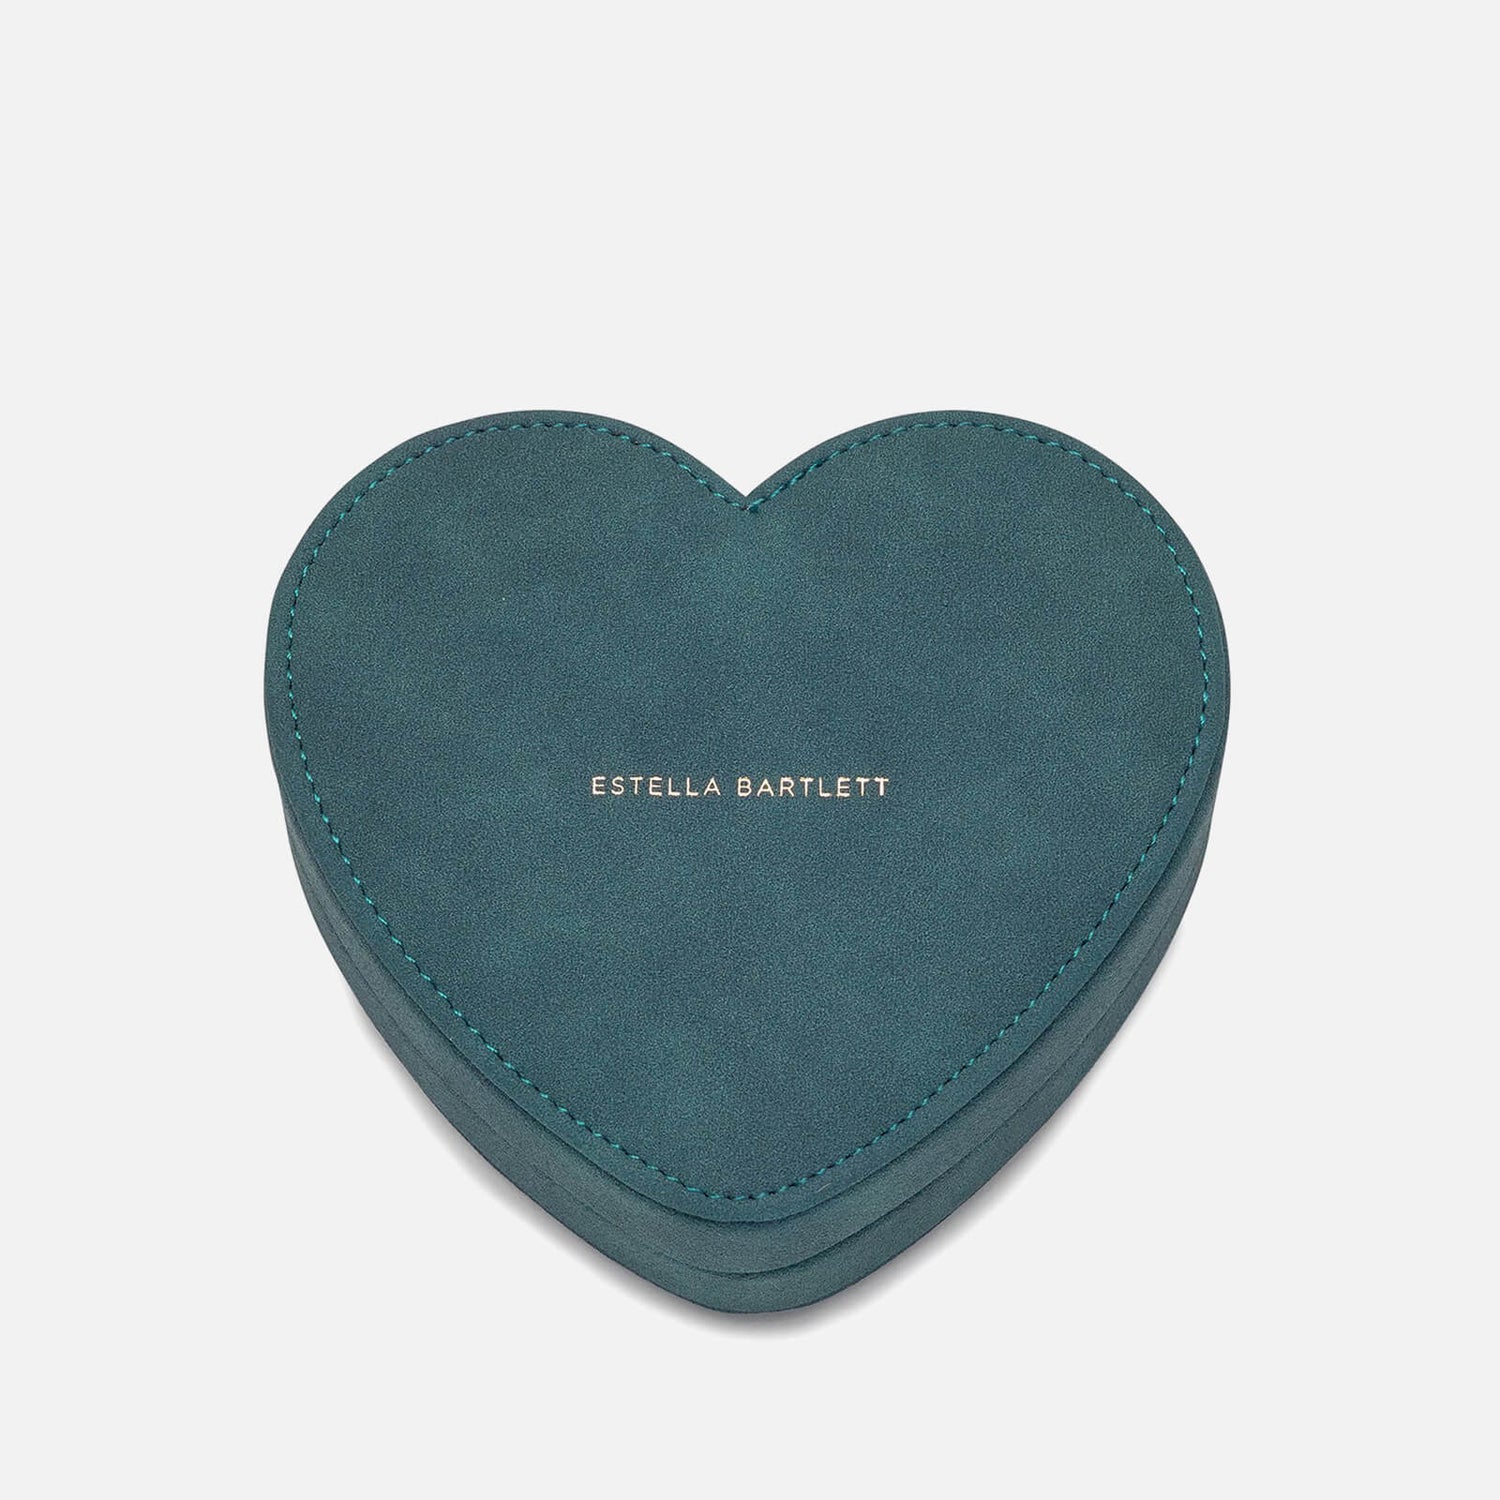 Estella Bartlett Heart Shaped Jewellery Box